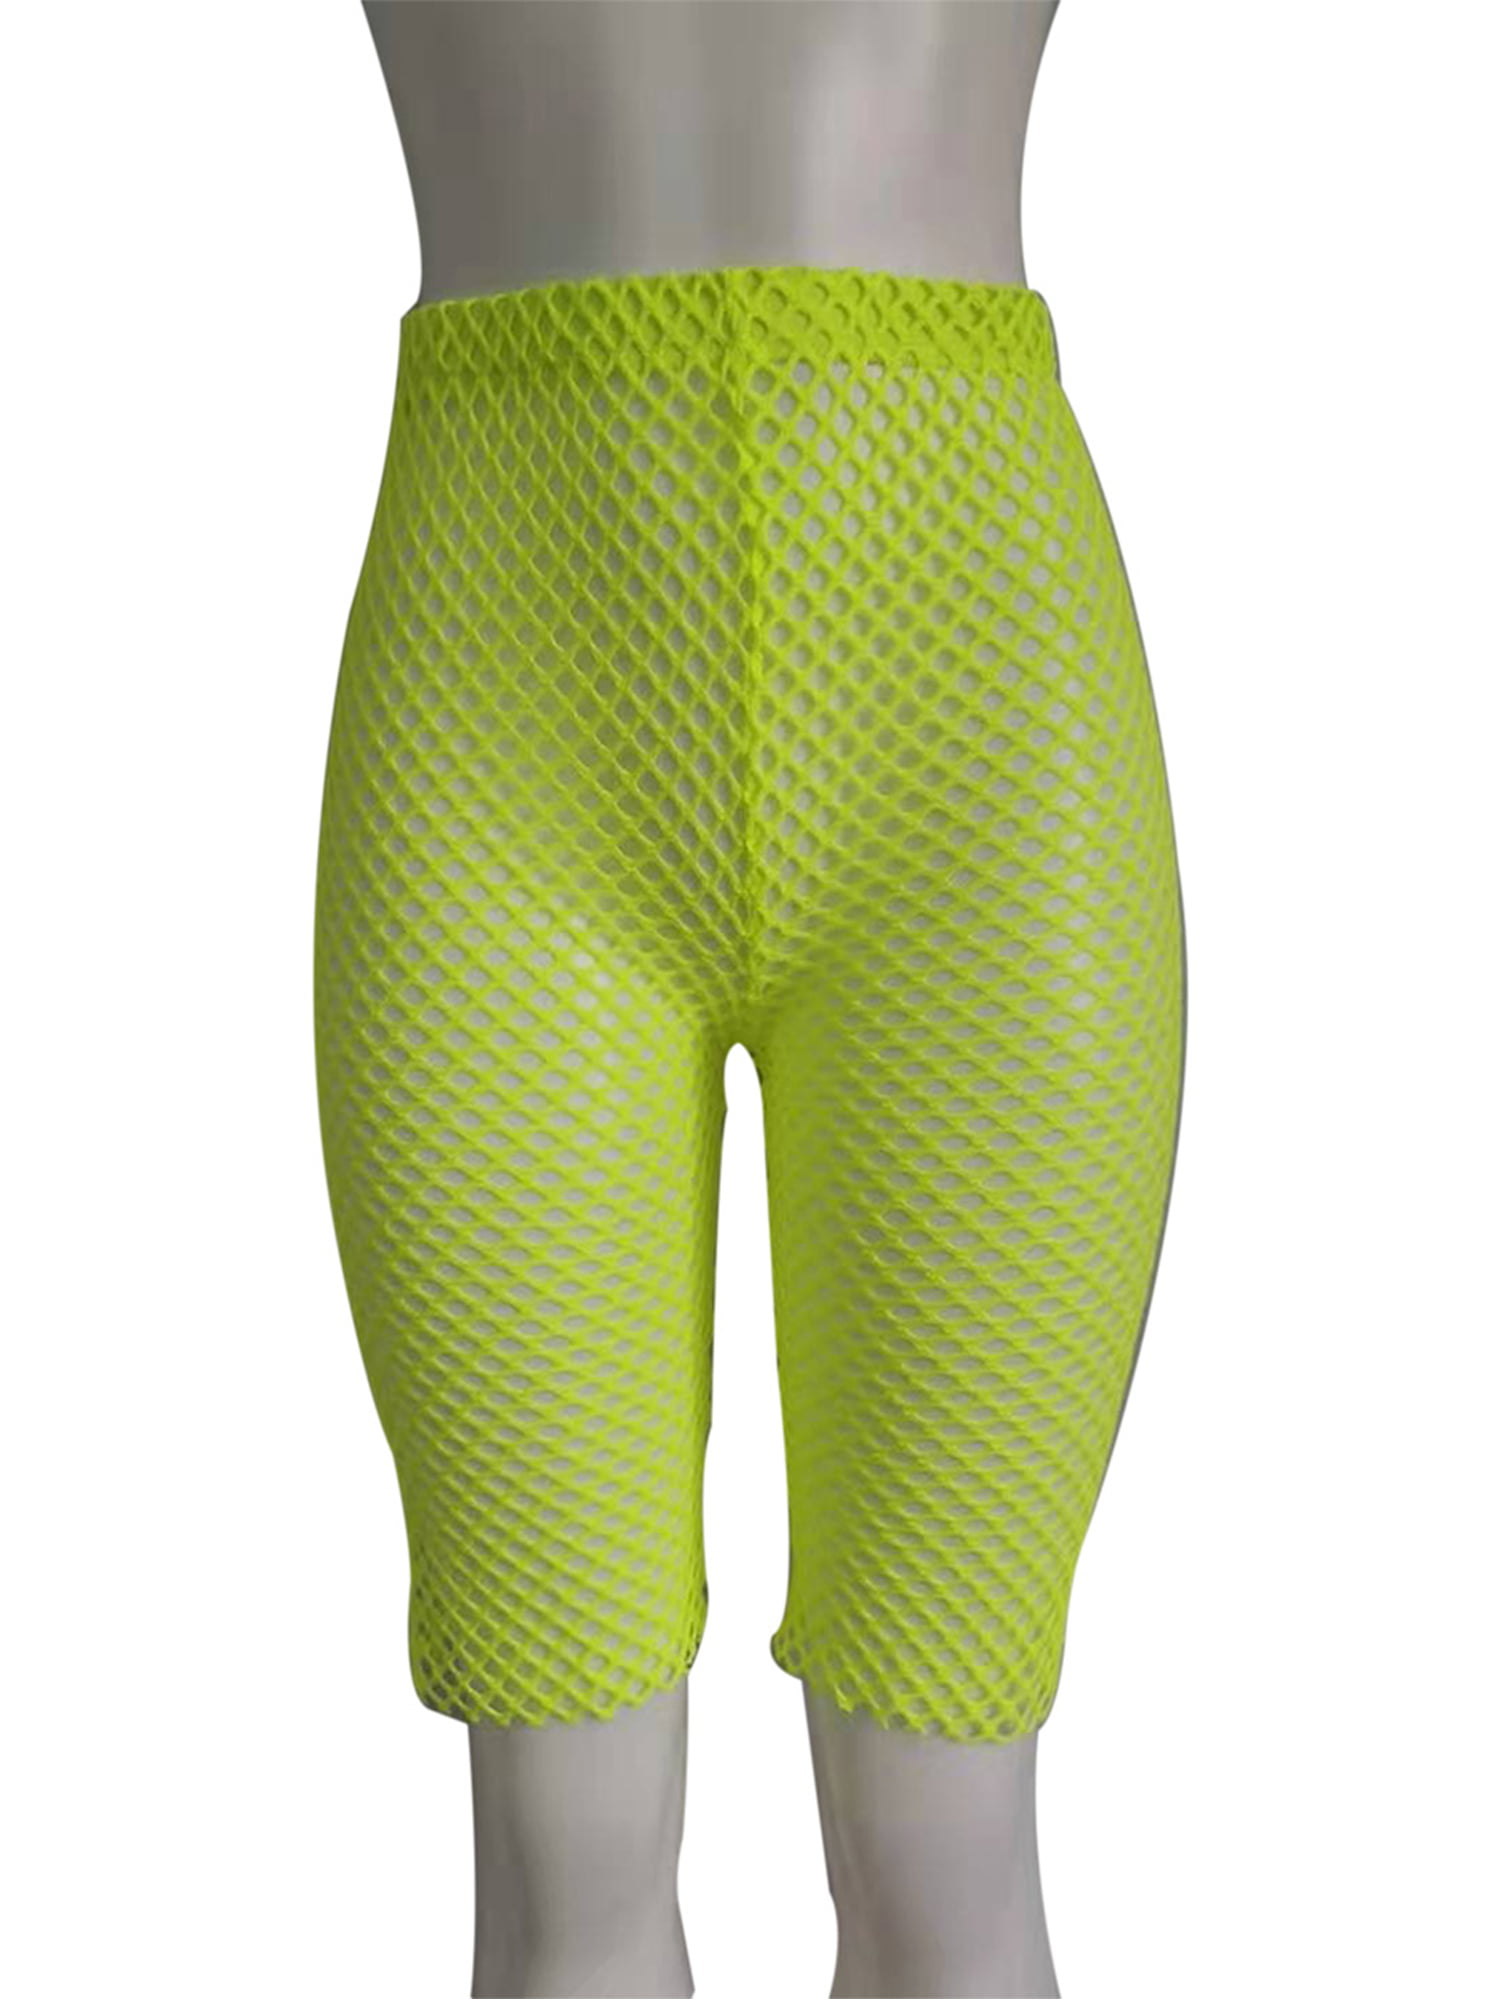 Womens Fishnet Mesh Cycling Shorts Pants Ladies Sports Wear Mesh Cycling Shorts 